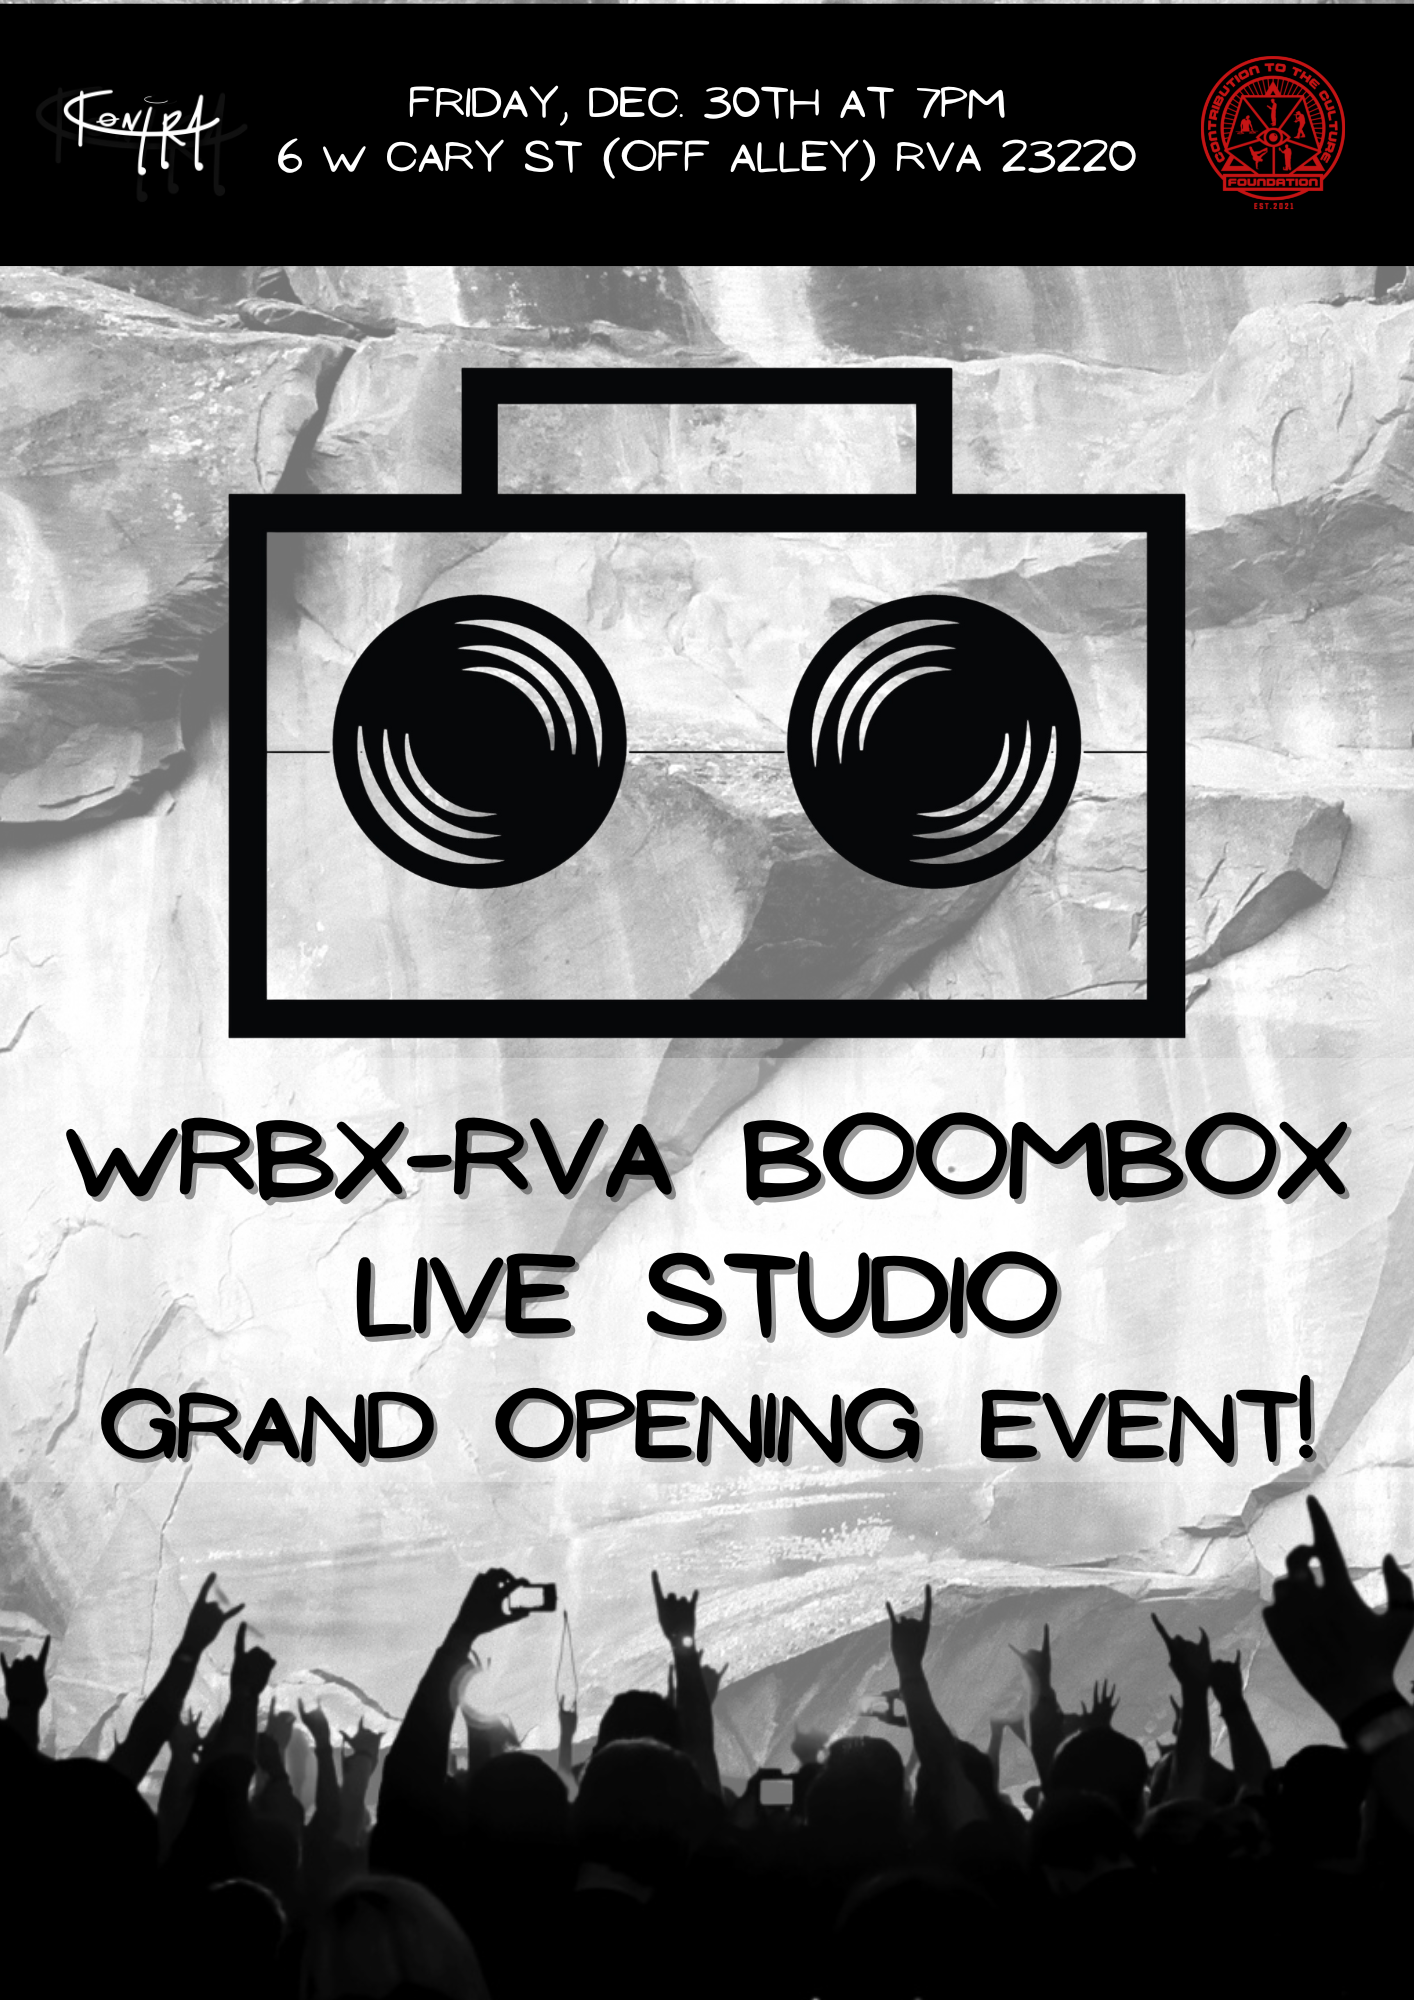 WRBX-RVA Boombox Live Broadcast Studio Grand Opening on dic. 31, 20:00@WRBX-RVA Boombox Live Broadcast Studio - Compra entradas y obtén información enWRBX-RVA Boombox 